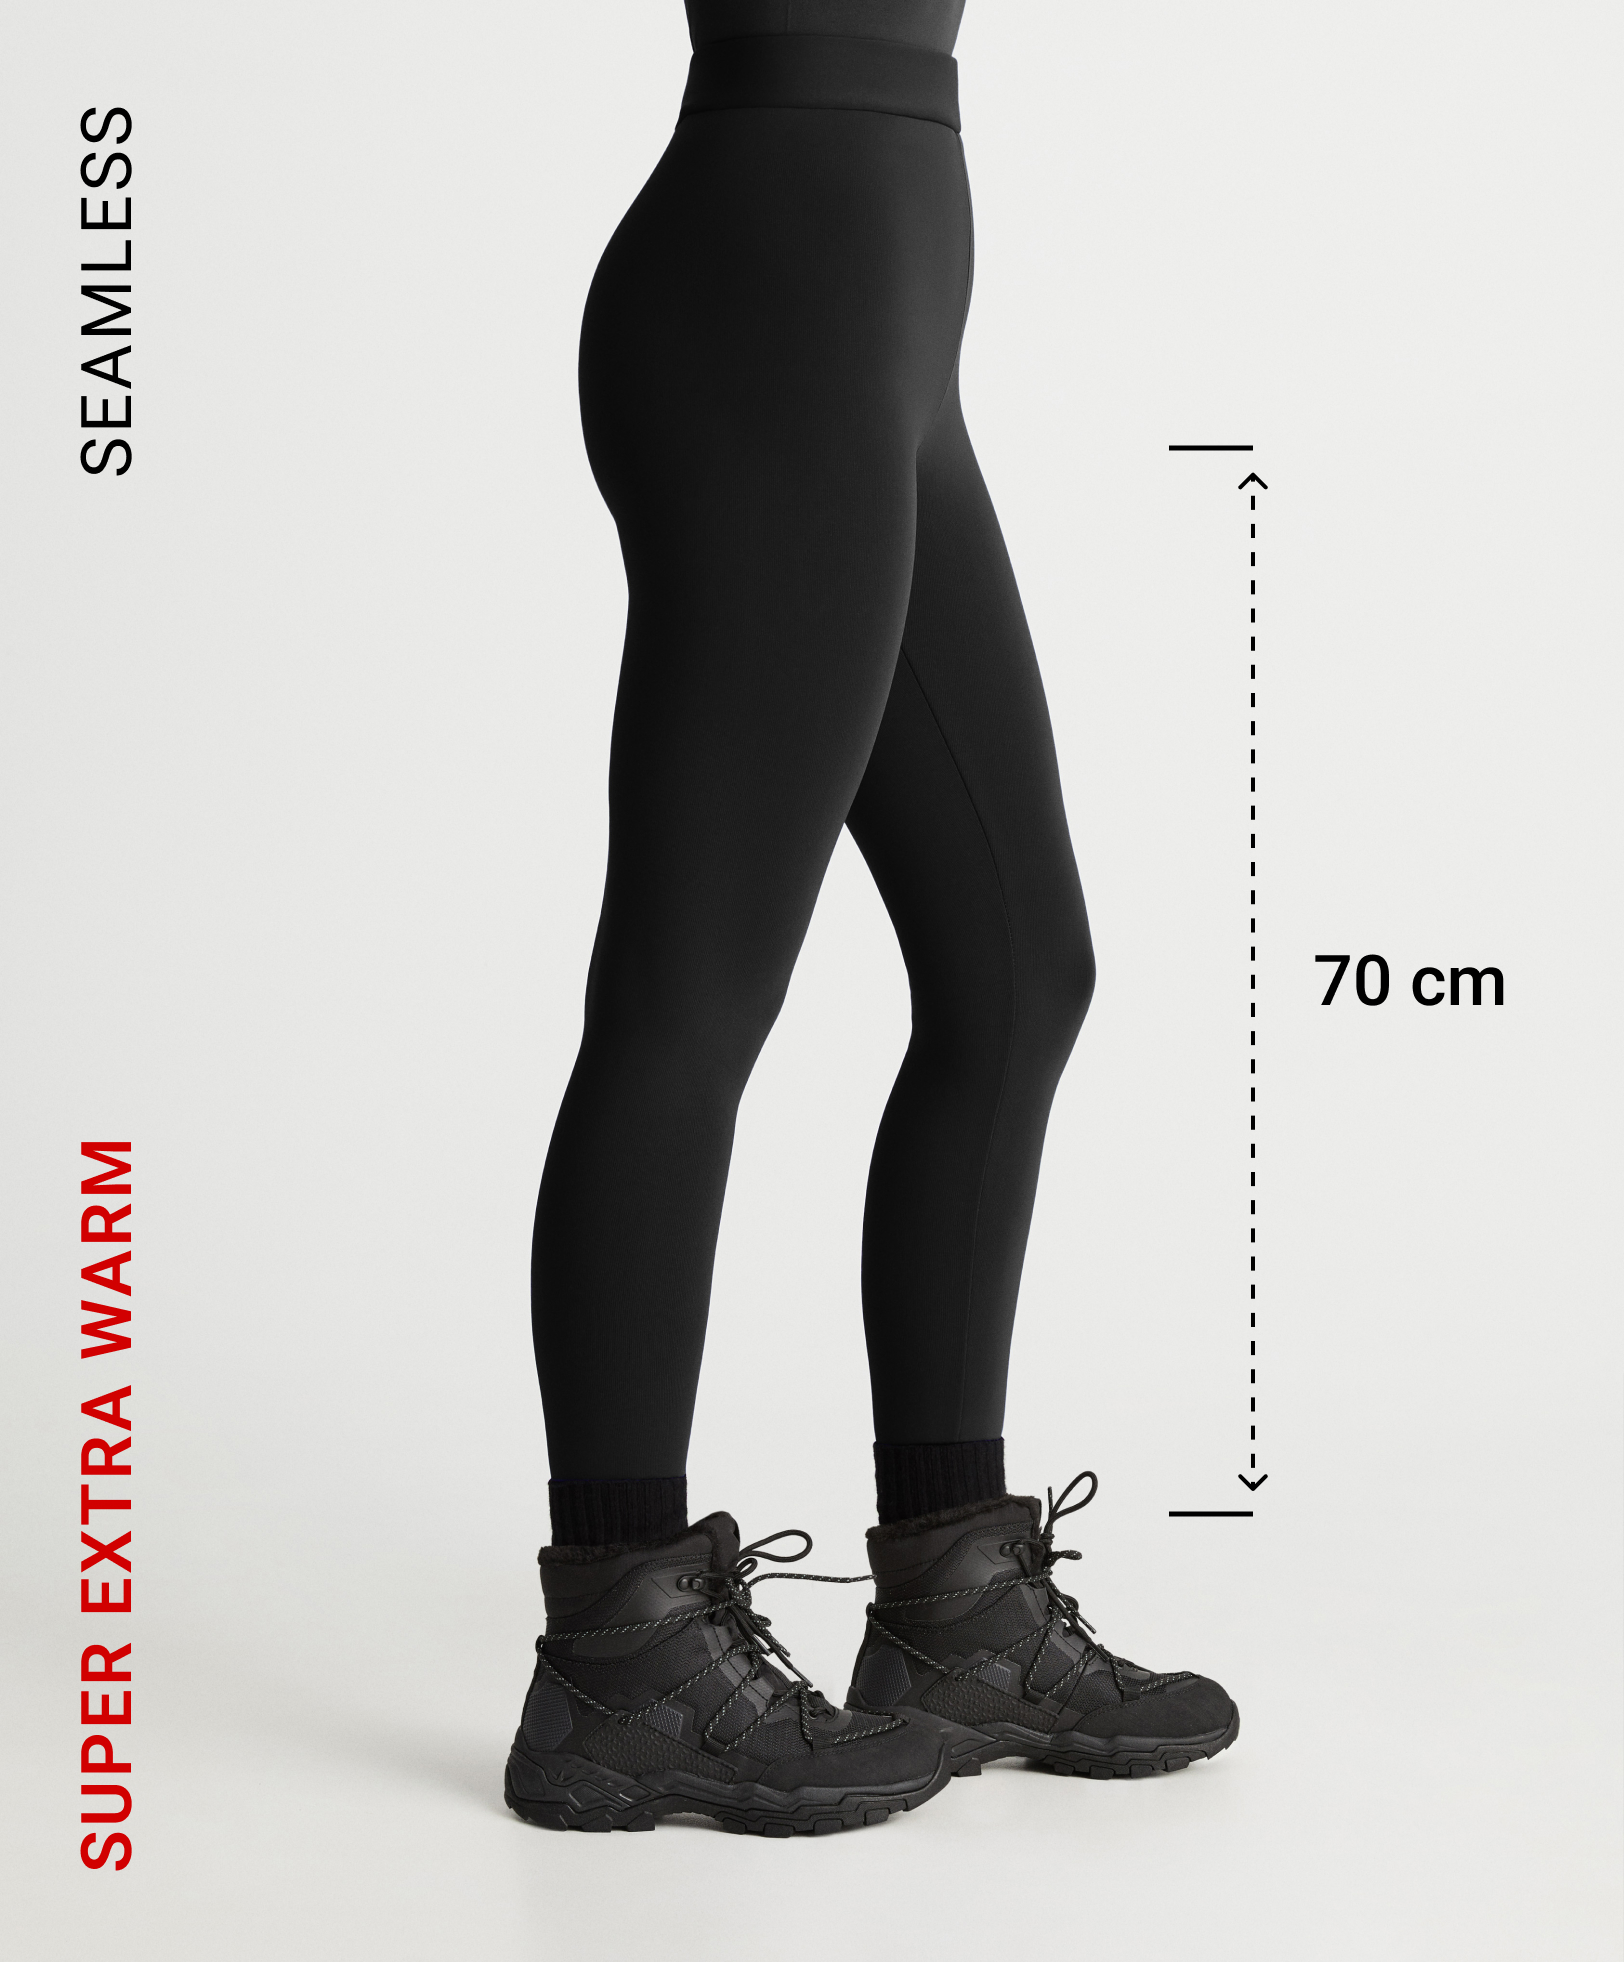 Super extra warm 70cm ankle-length leggings